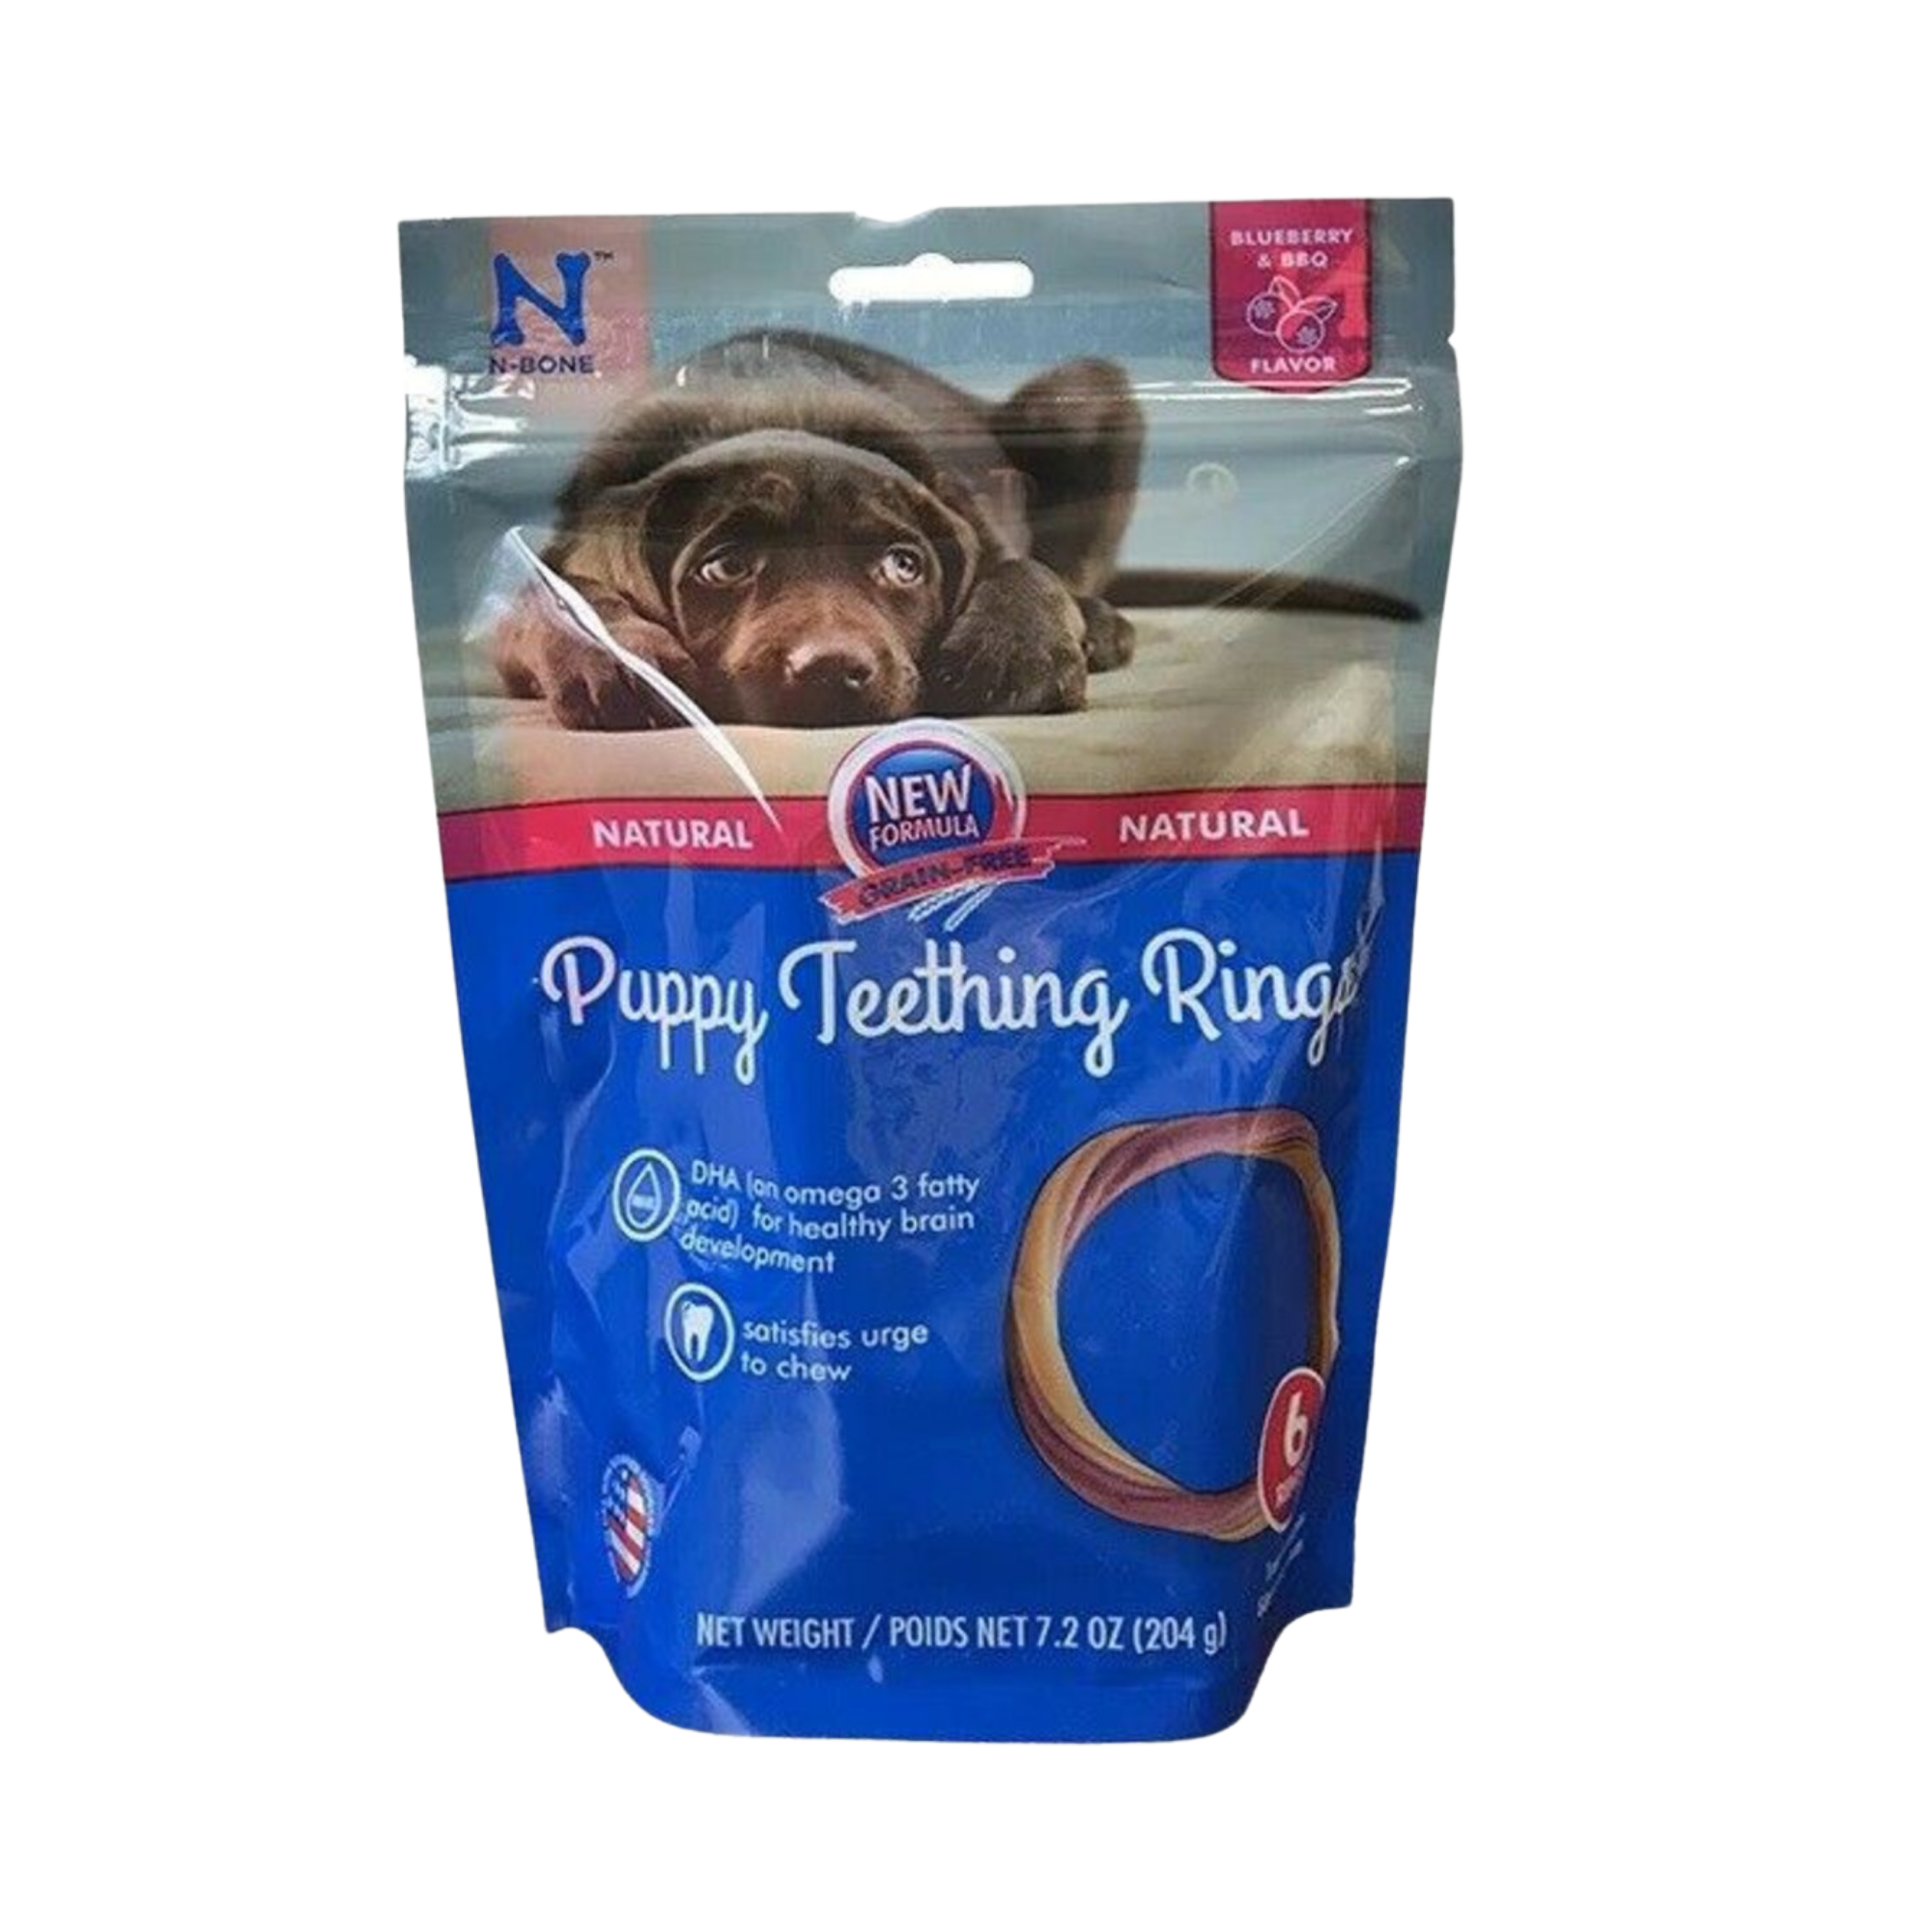 NPIC N-Bone Puppy Teething Ring Grain Free Blueberry/Bacon - Mutts & Co.